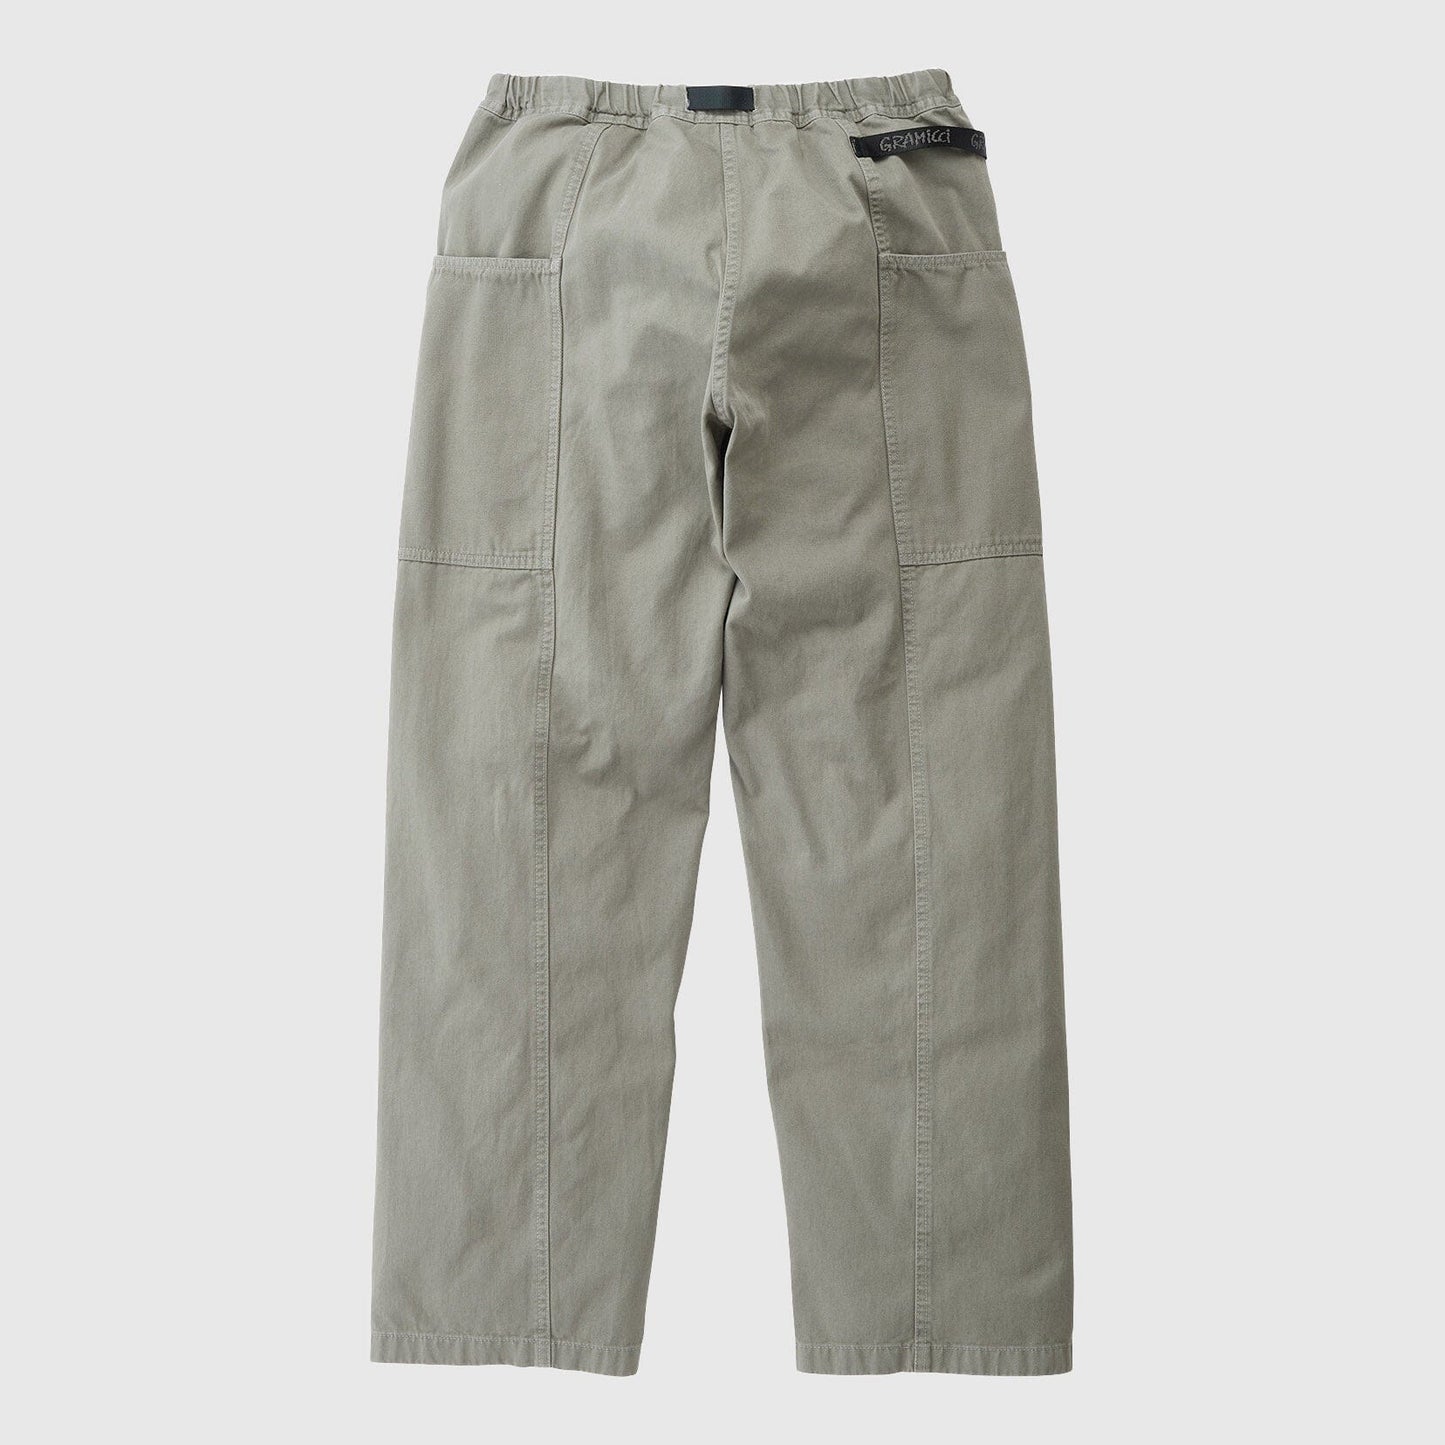 Gramicci Gadget Pants - Dusty Khaki Pants Gramicci 